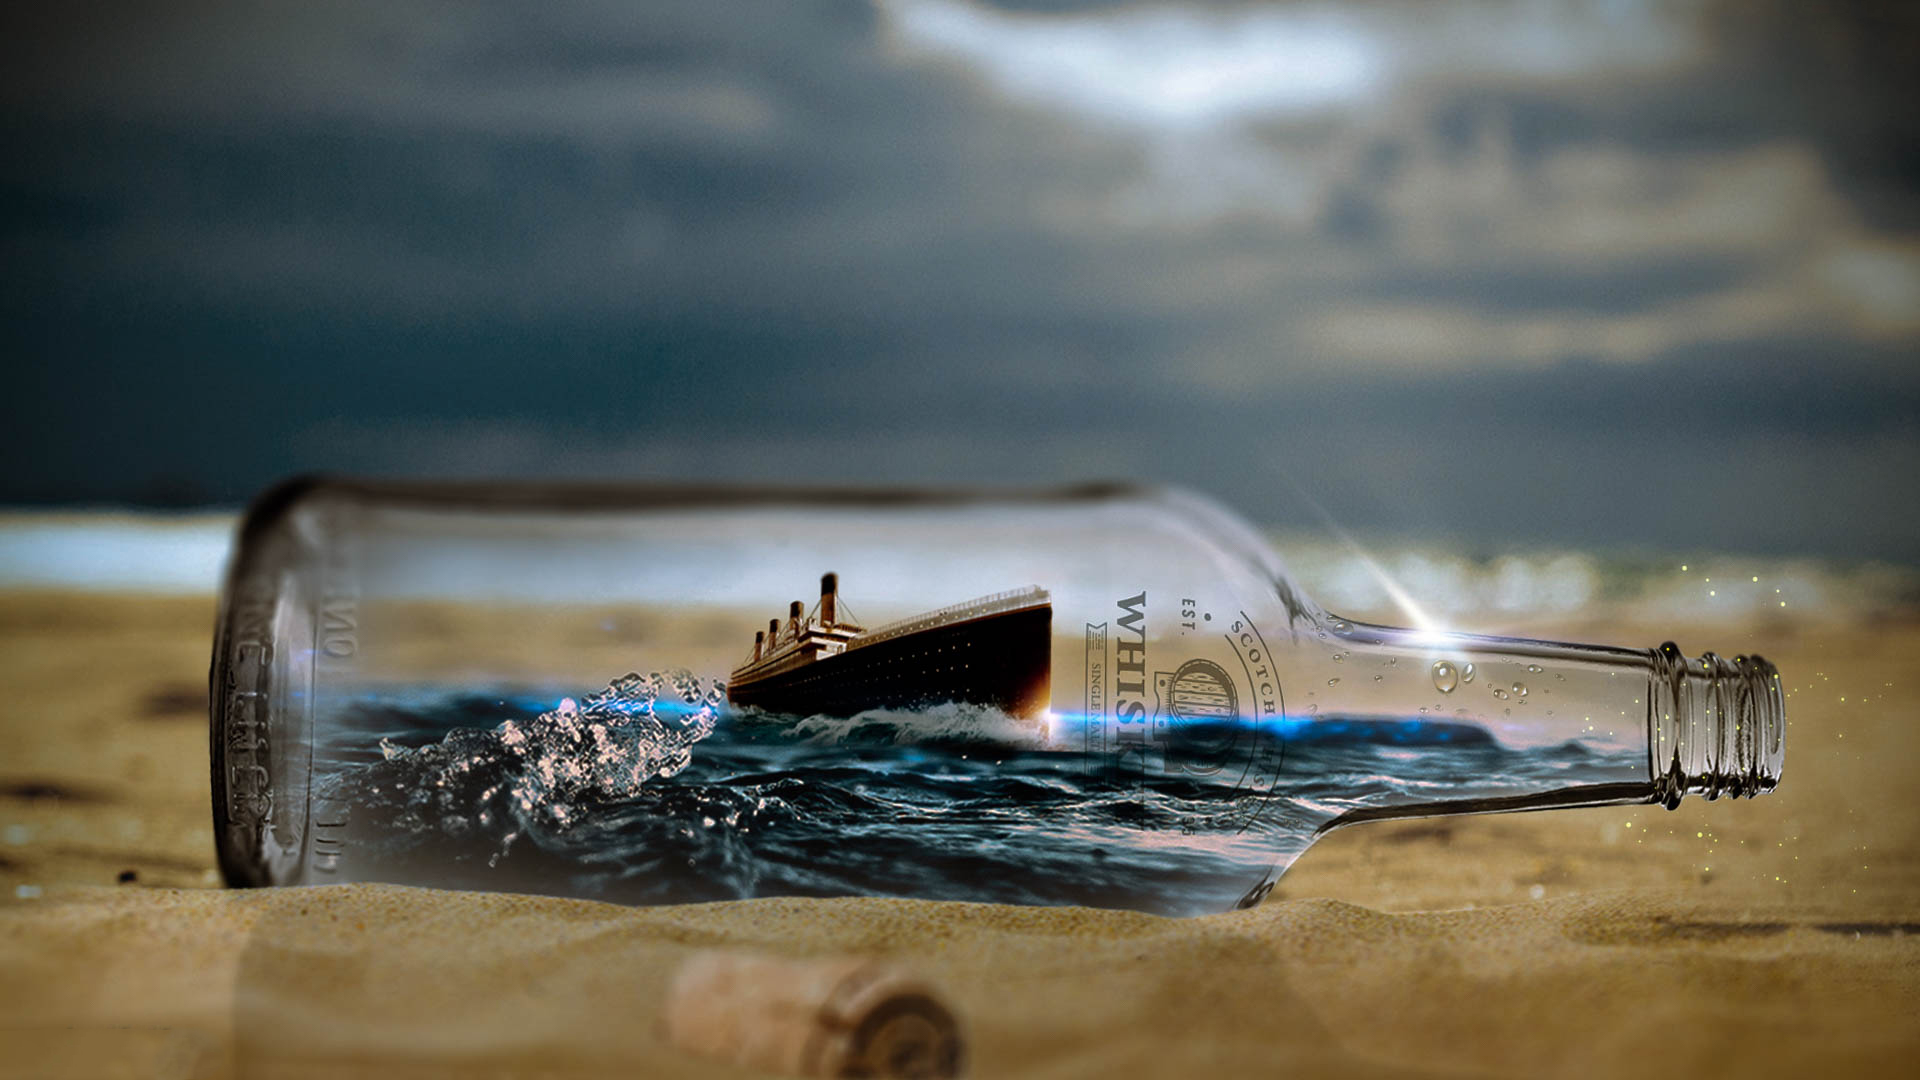 HD desktop wallpaper: Sand, Ship, Photography, Bottle, Manipulation, Titanic  download free picture #873124